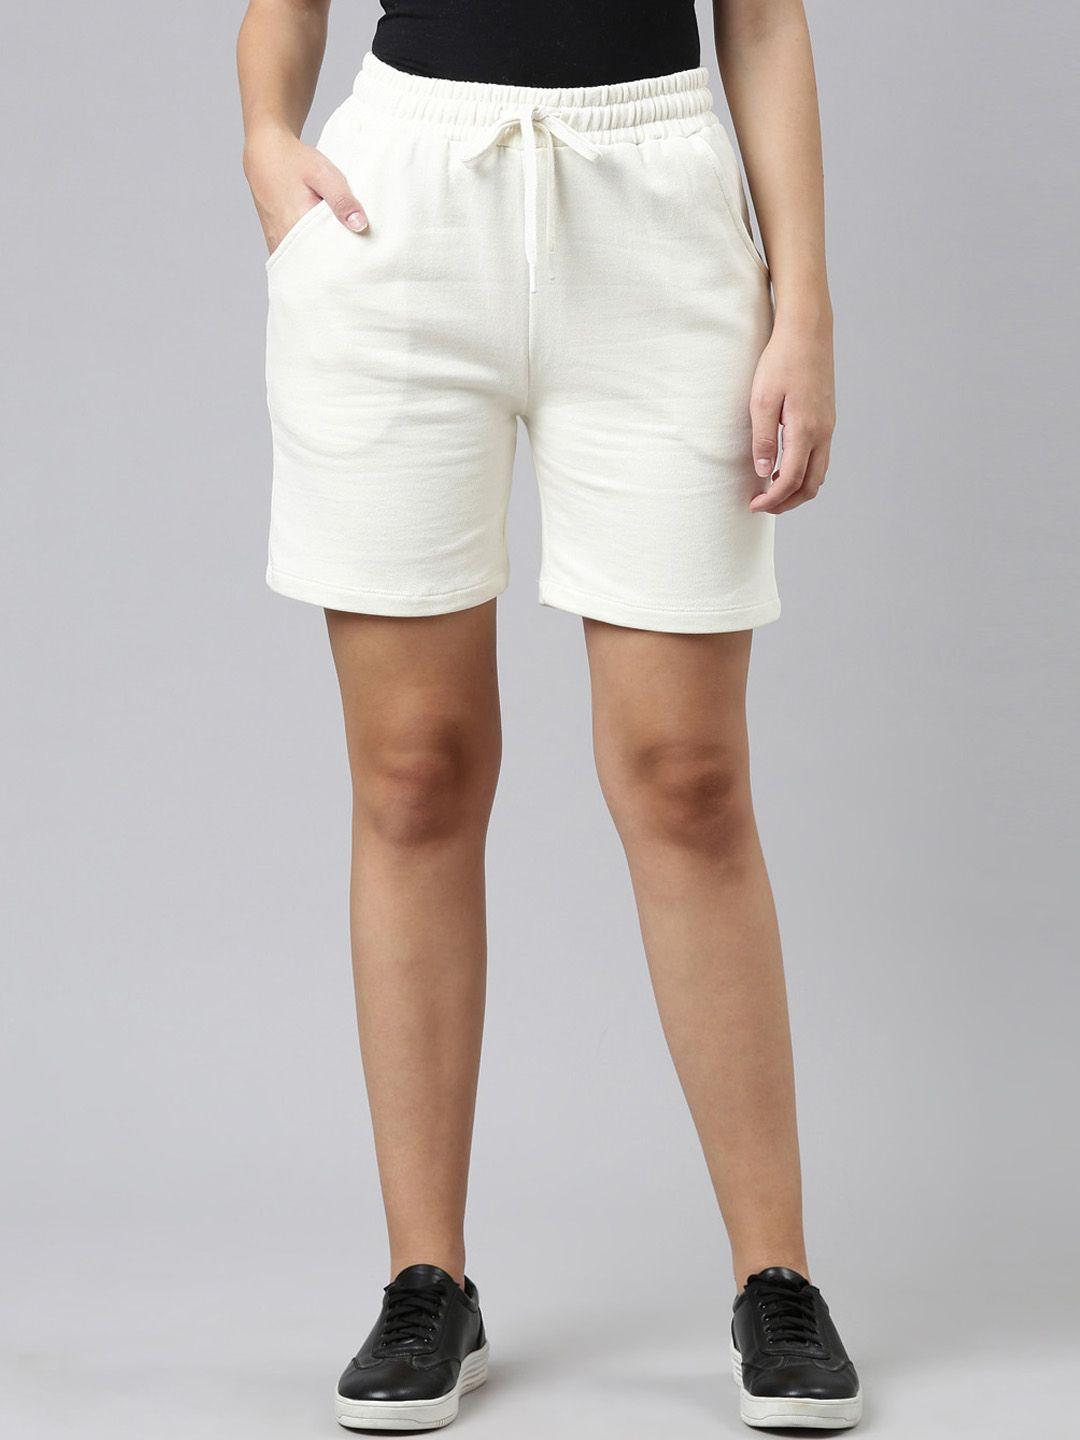 twin-birds-women-mid-rise-pure-cotton-shorts